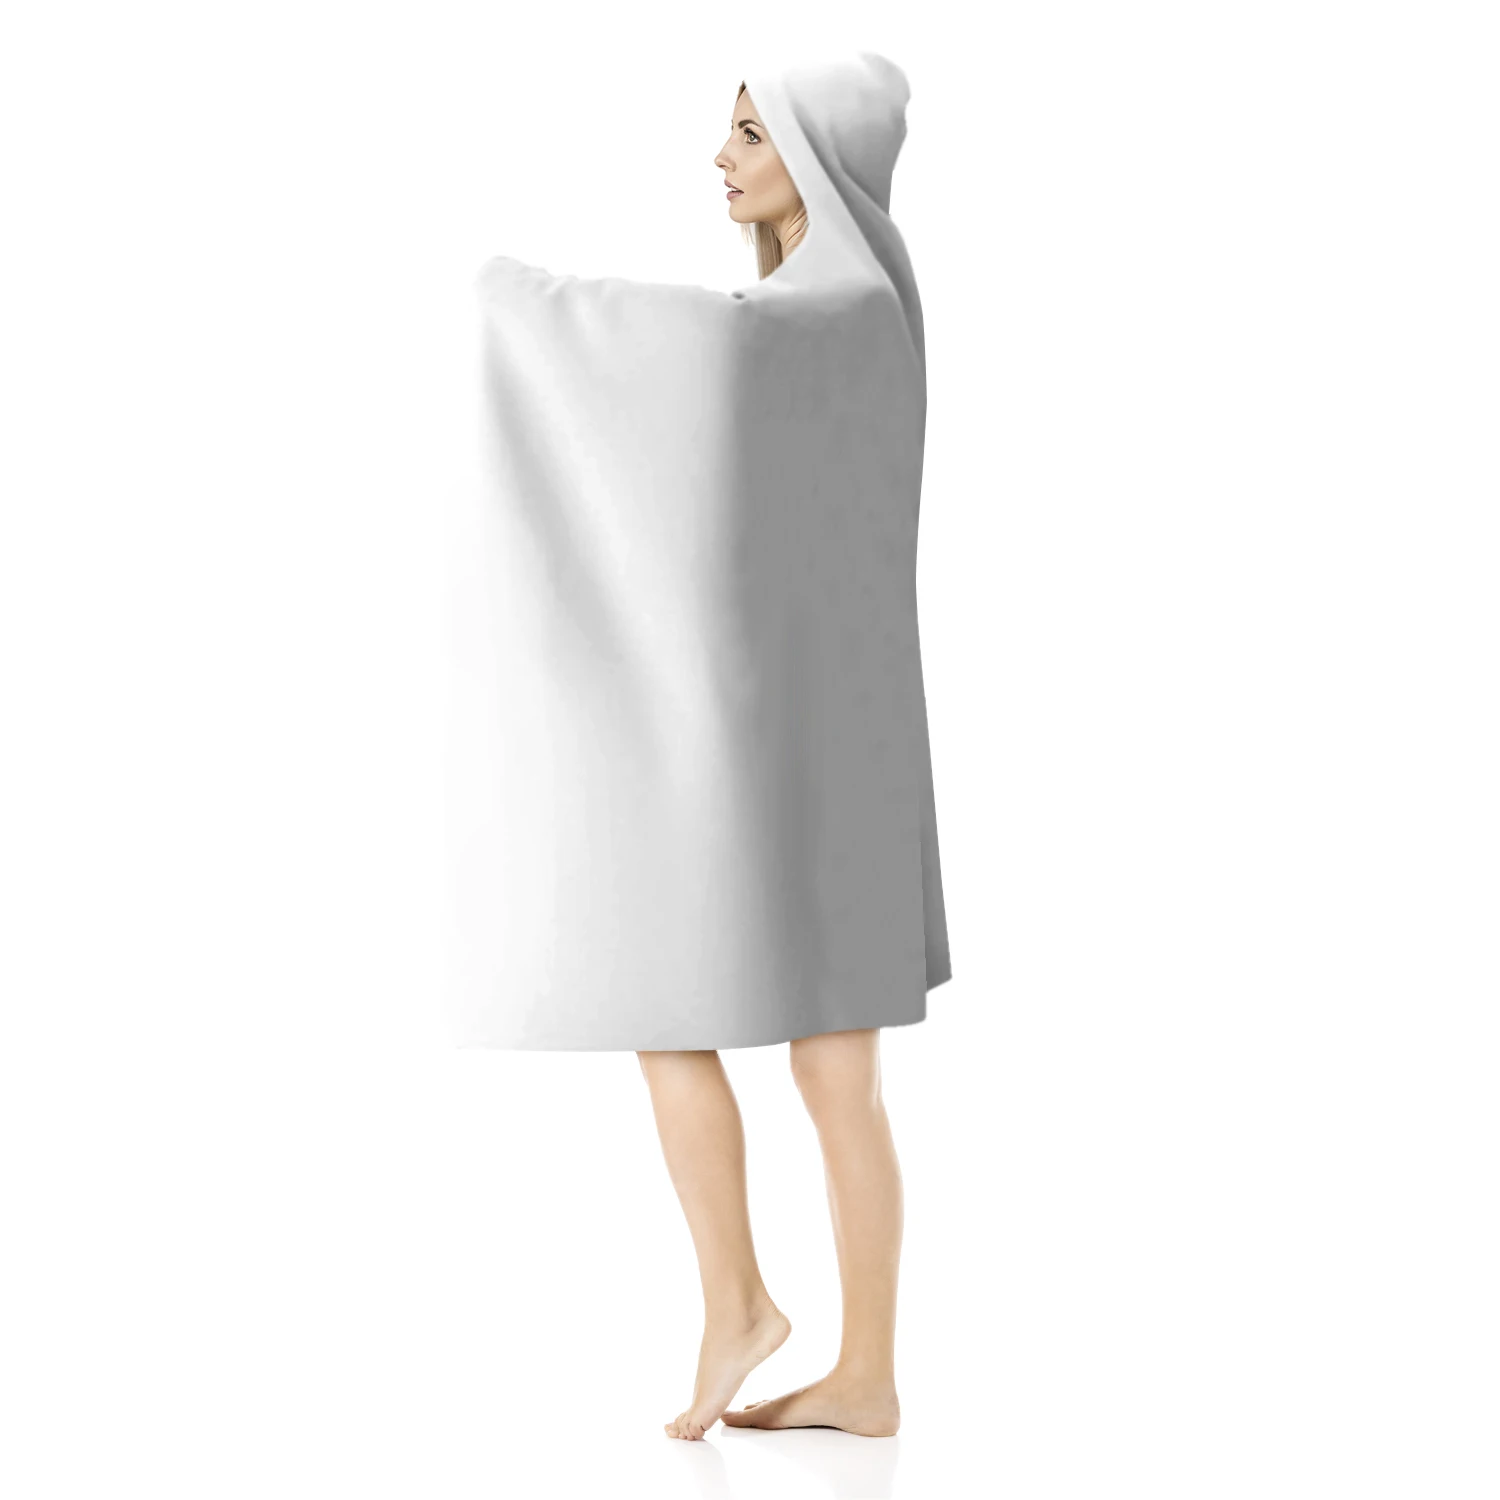 Outer galaxy universe home office winter prints OEM service wearable fleece wrap cloak hooded blankets